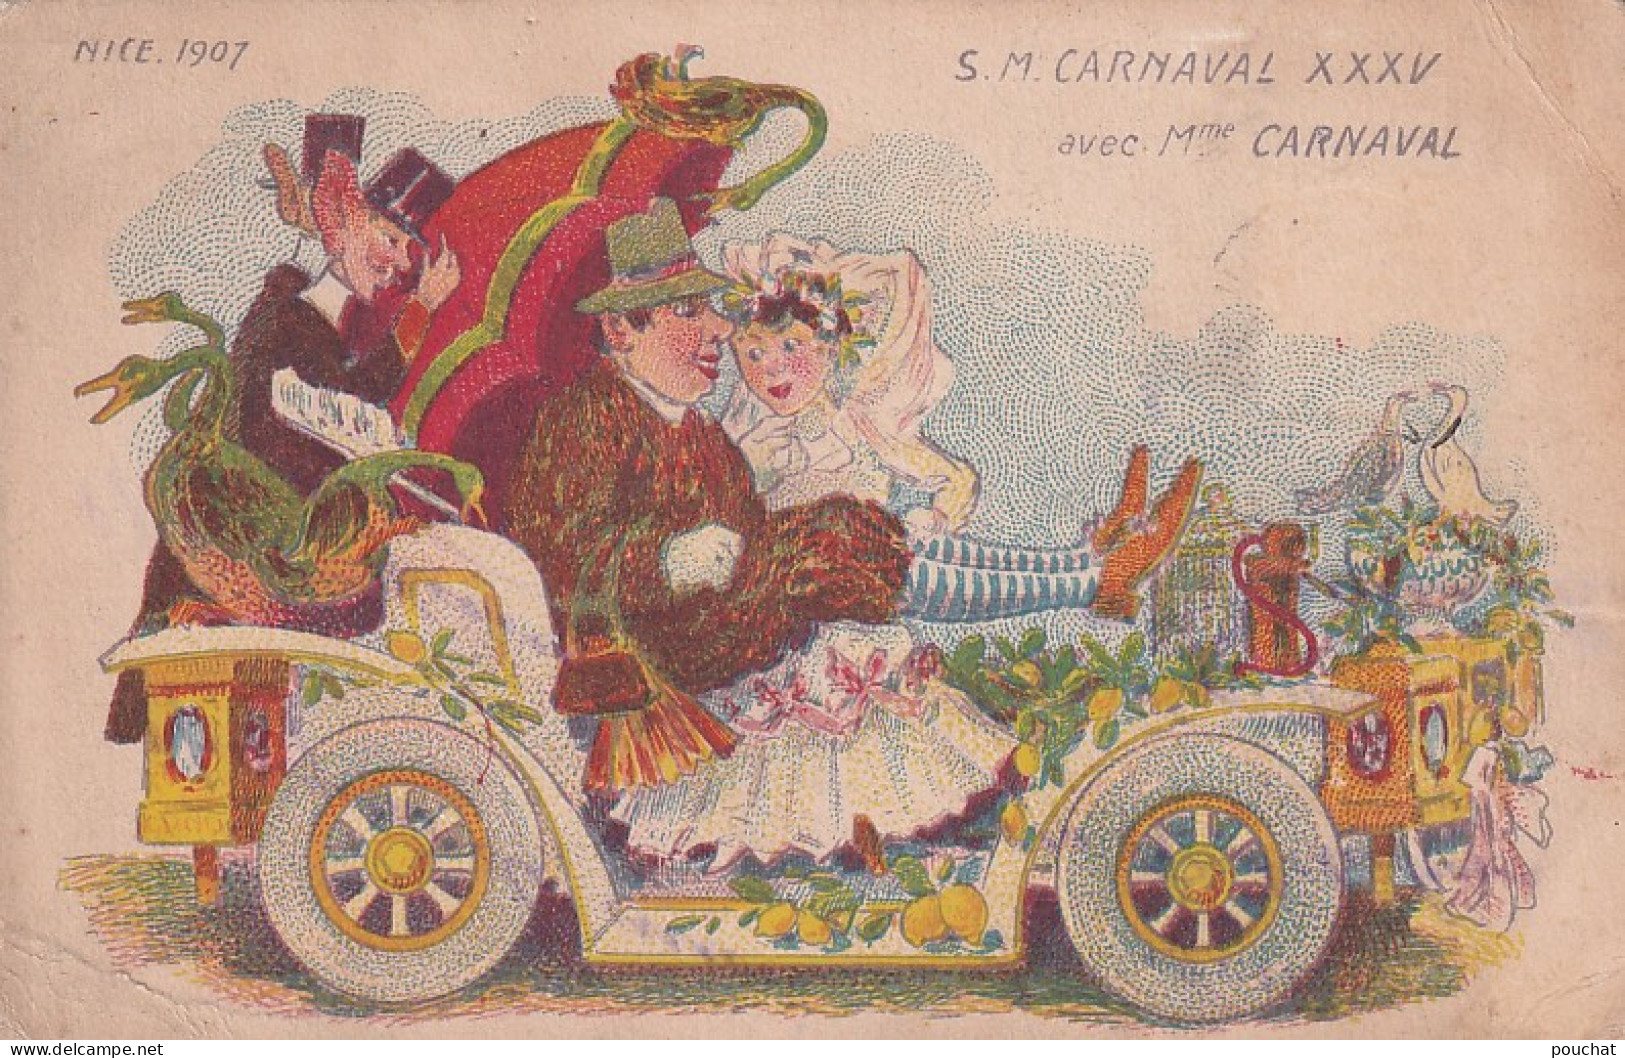 KO 27-(06) NICE 1907 - S. M. CARNAVAL XXXV AVEC Mme CARNAVAL - ILLUSTRATEUR - Karneval